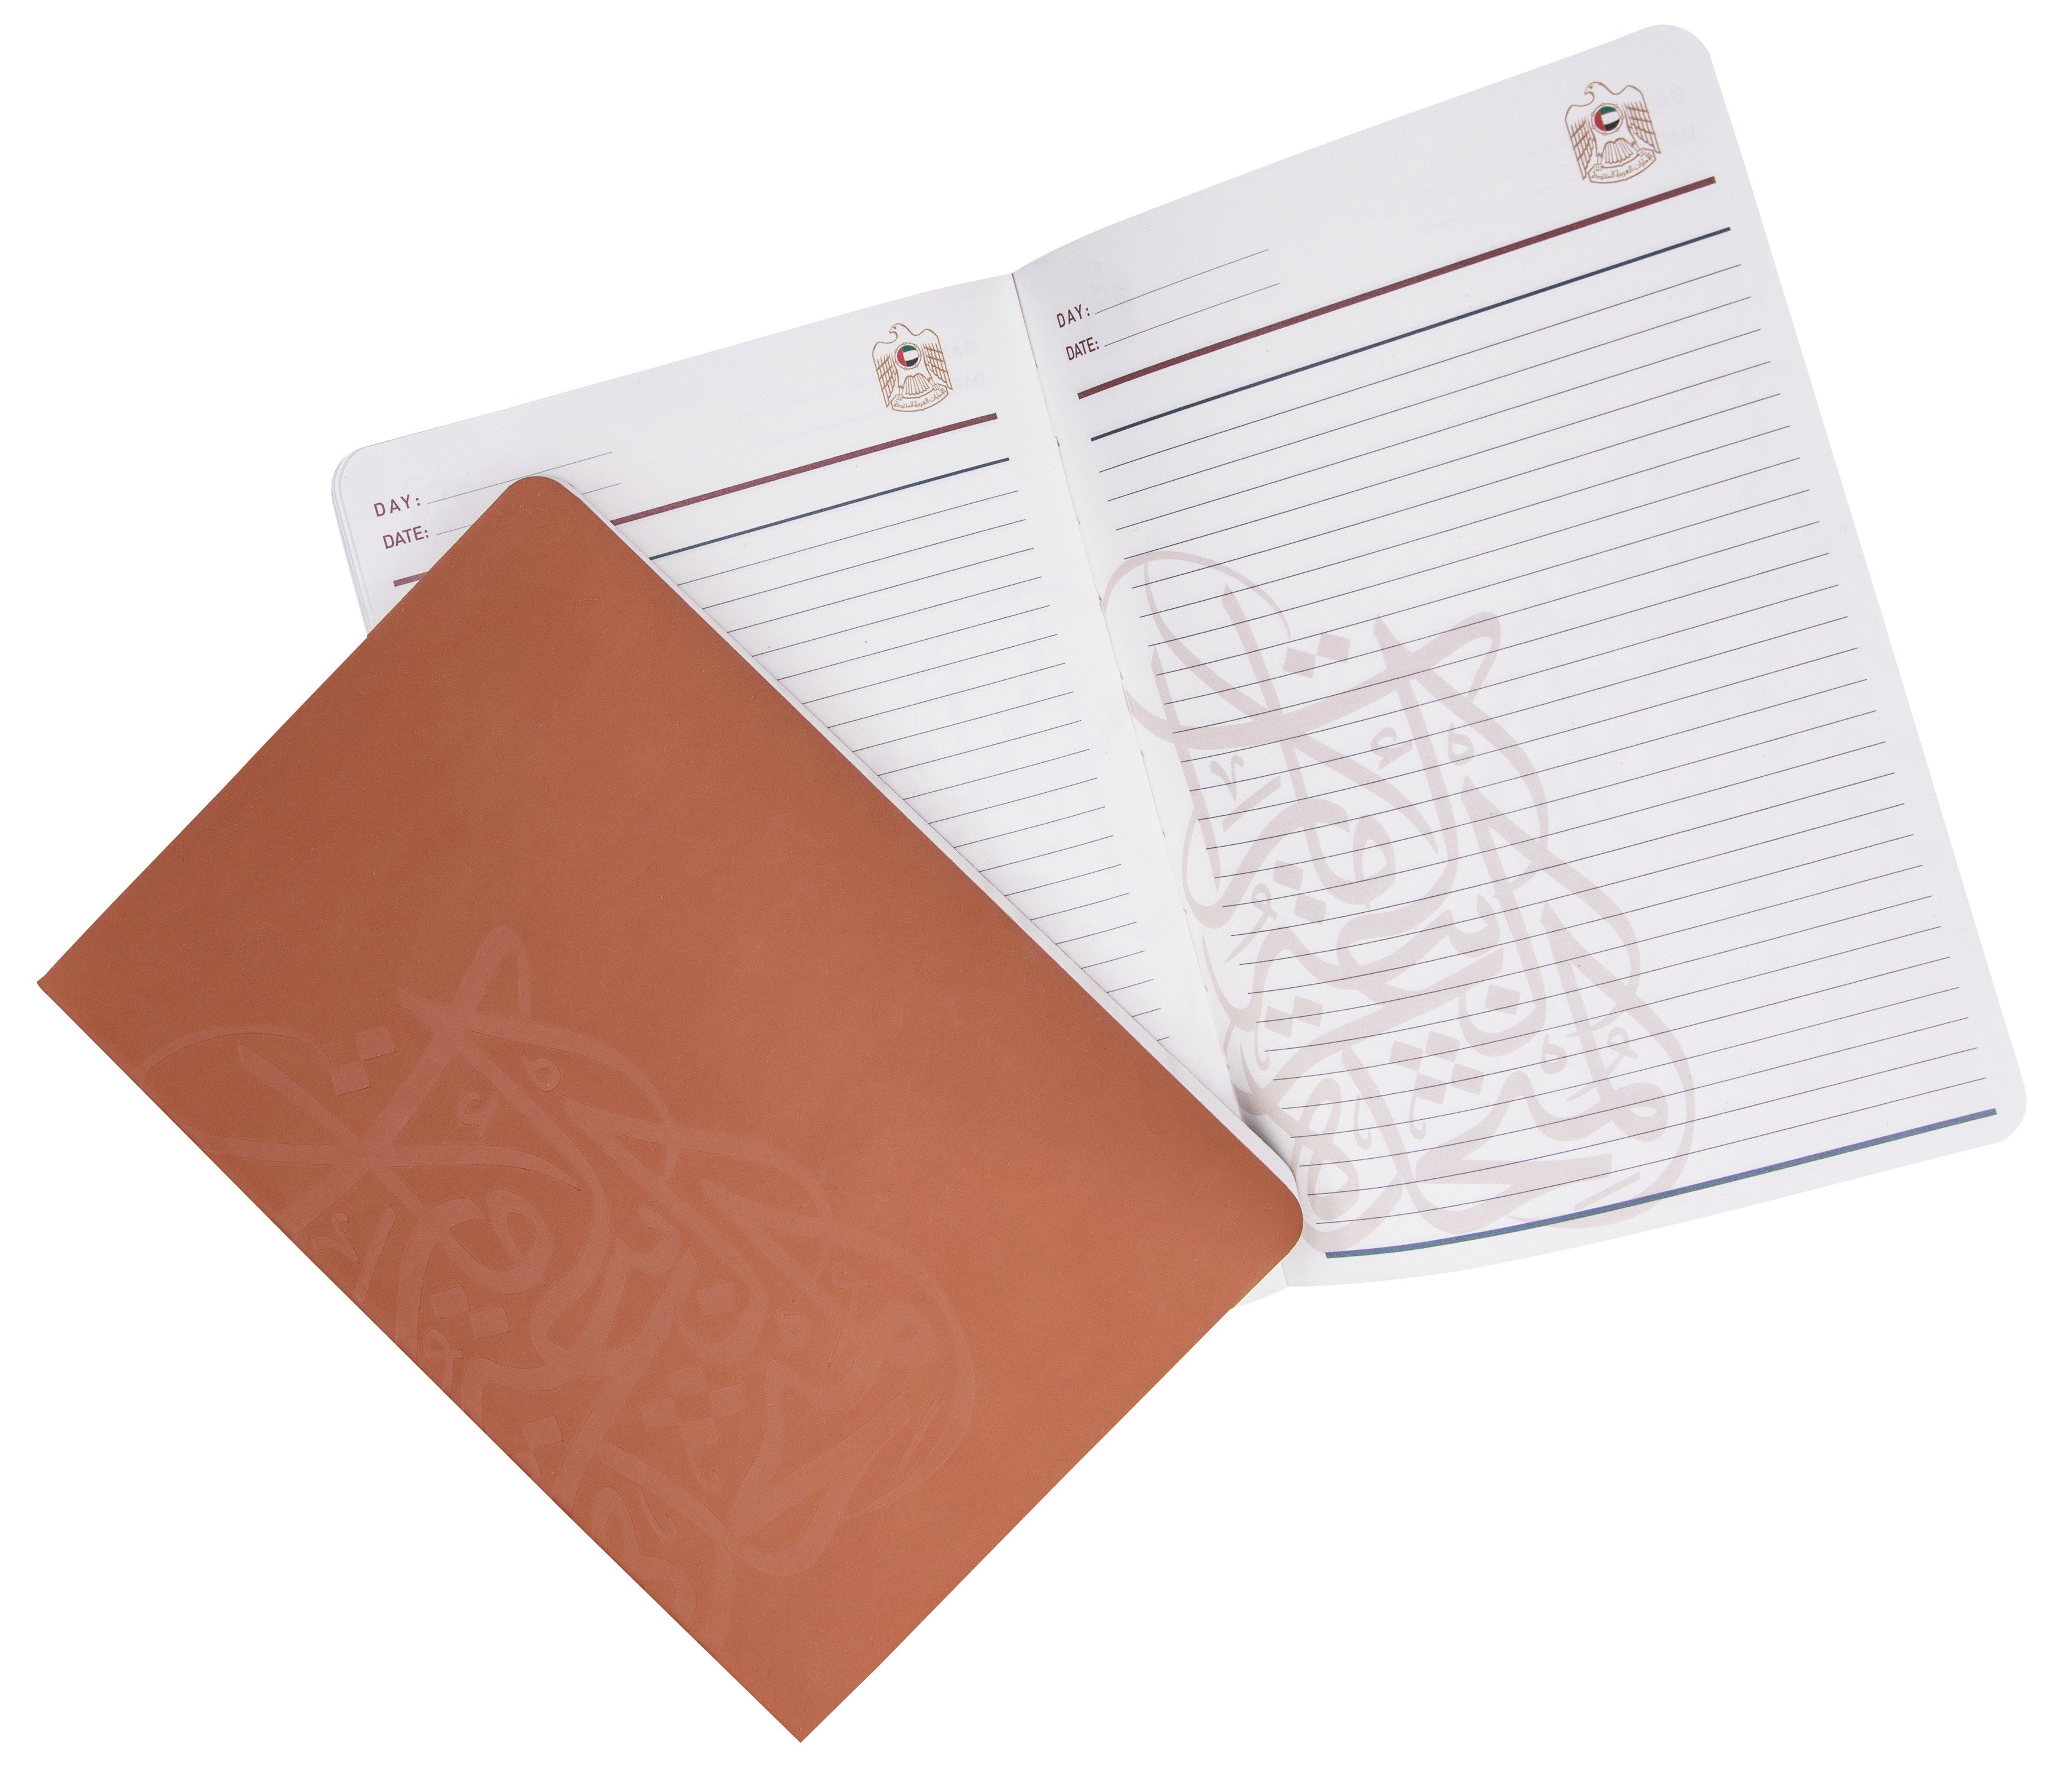 Rovatti Inner UAE Notebook Brown | stationery to gift | uae gift ideas